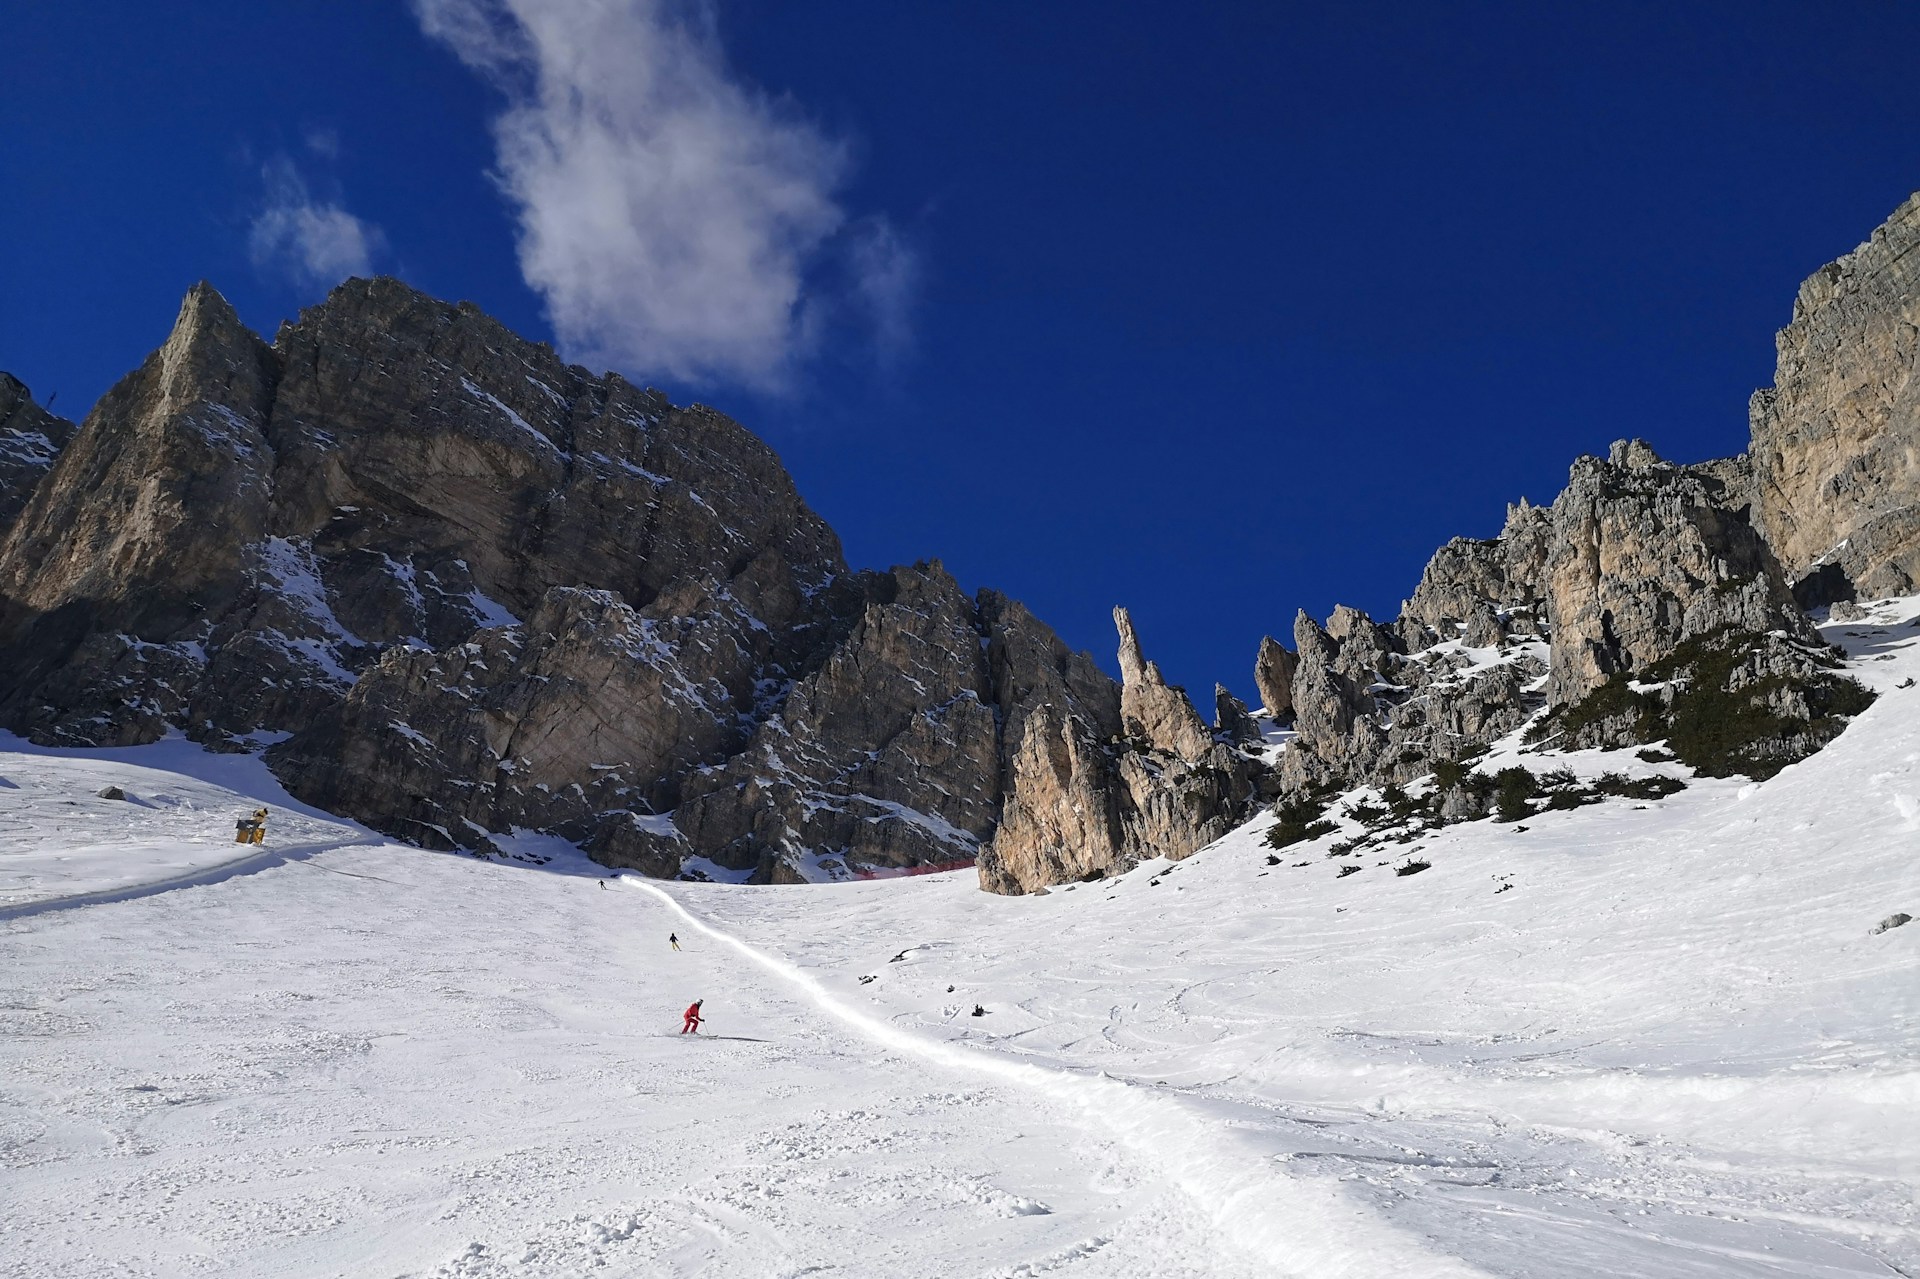 Ski resort italy campino d’ampezzo